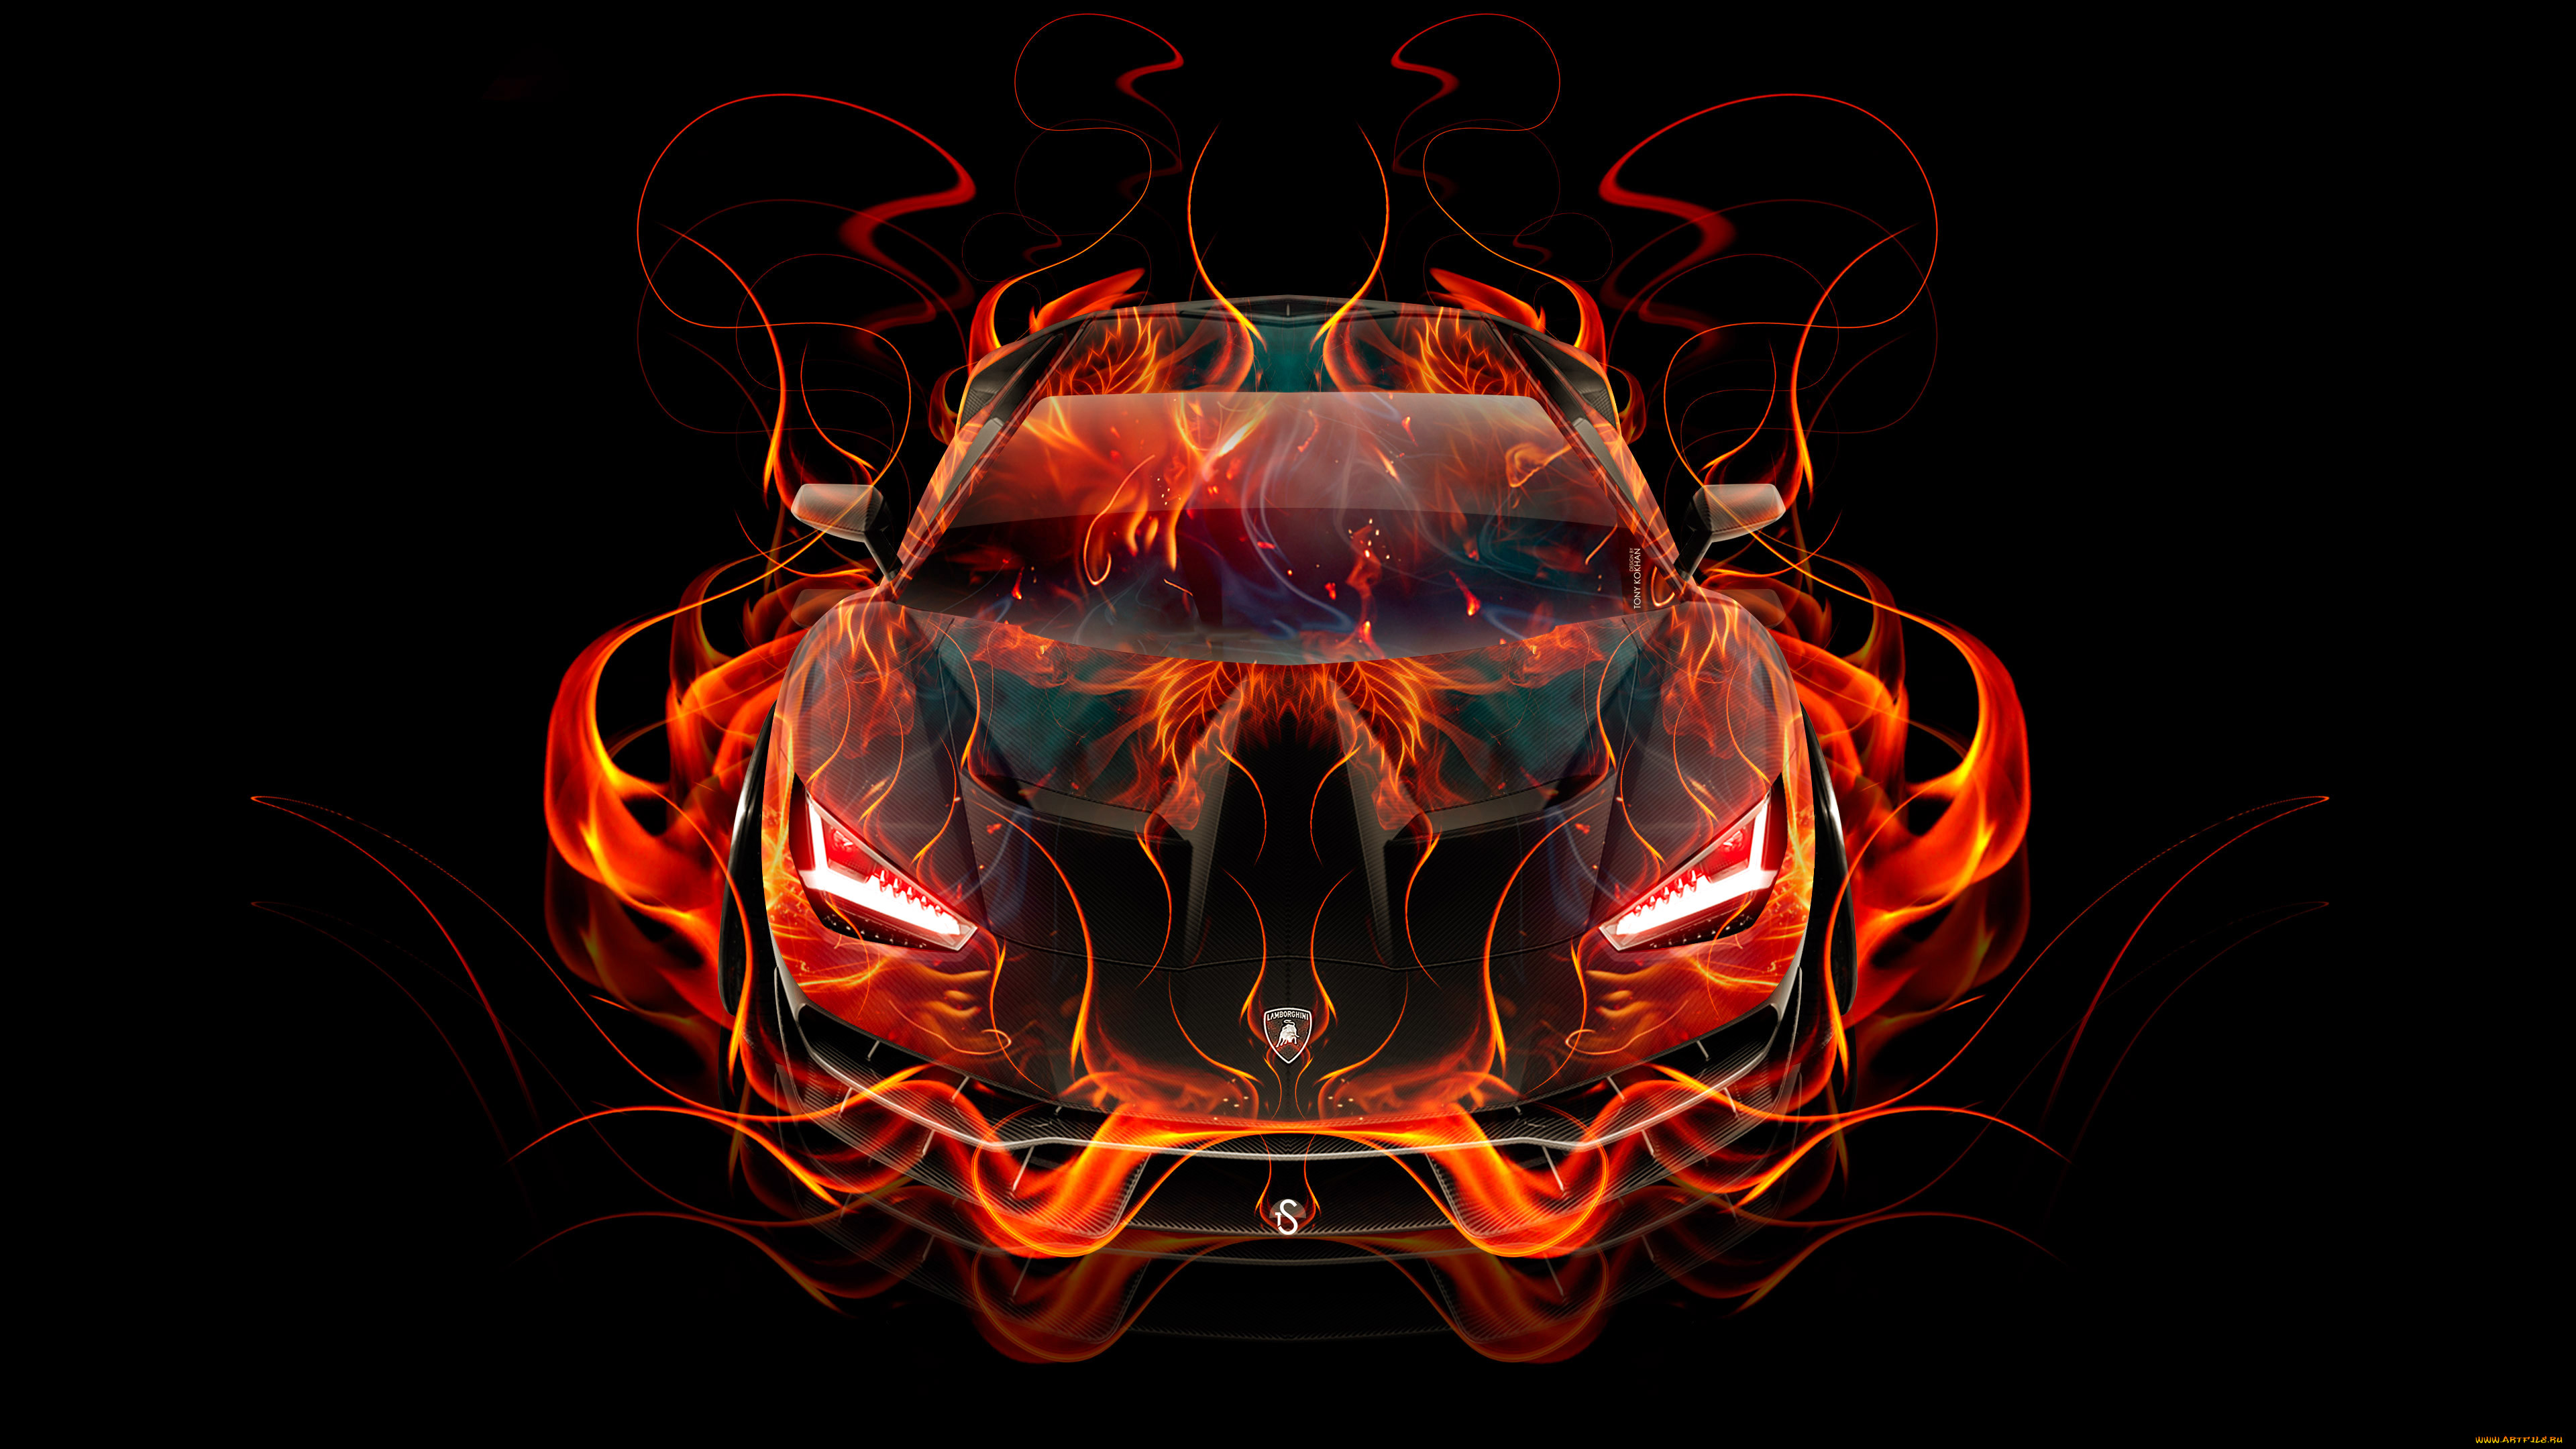 lamborghini centenario frontup super fire abstract car 2016, , 3, lamborghini, centenario, frontup, super, fire, abstract, car, 2016